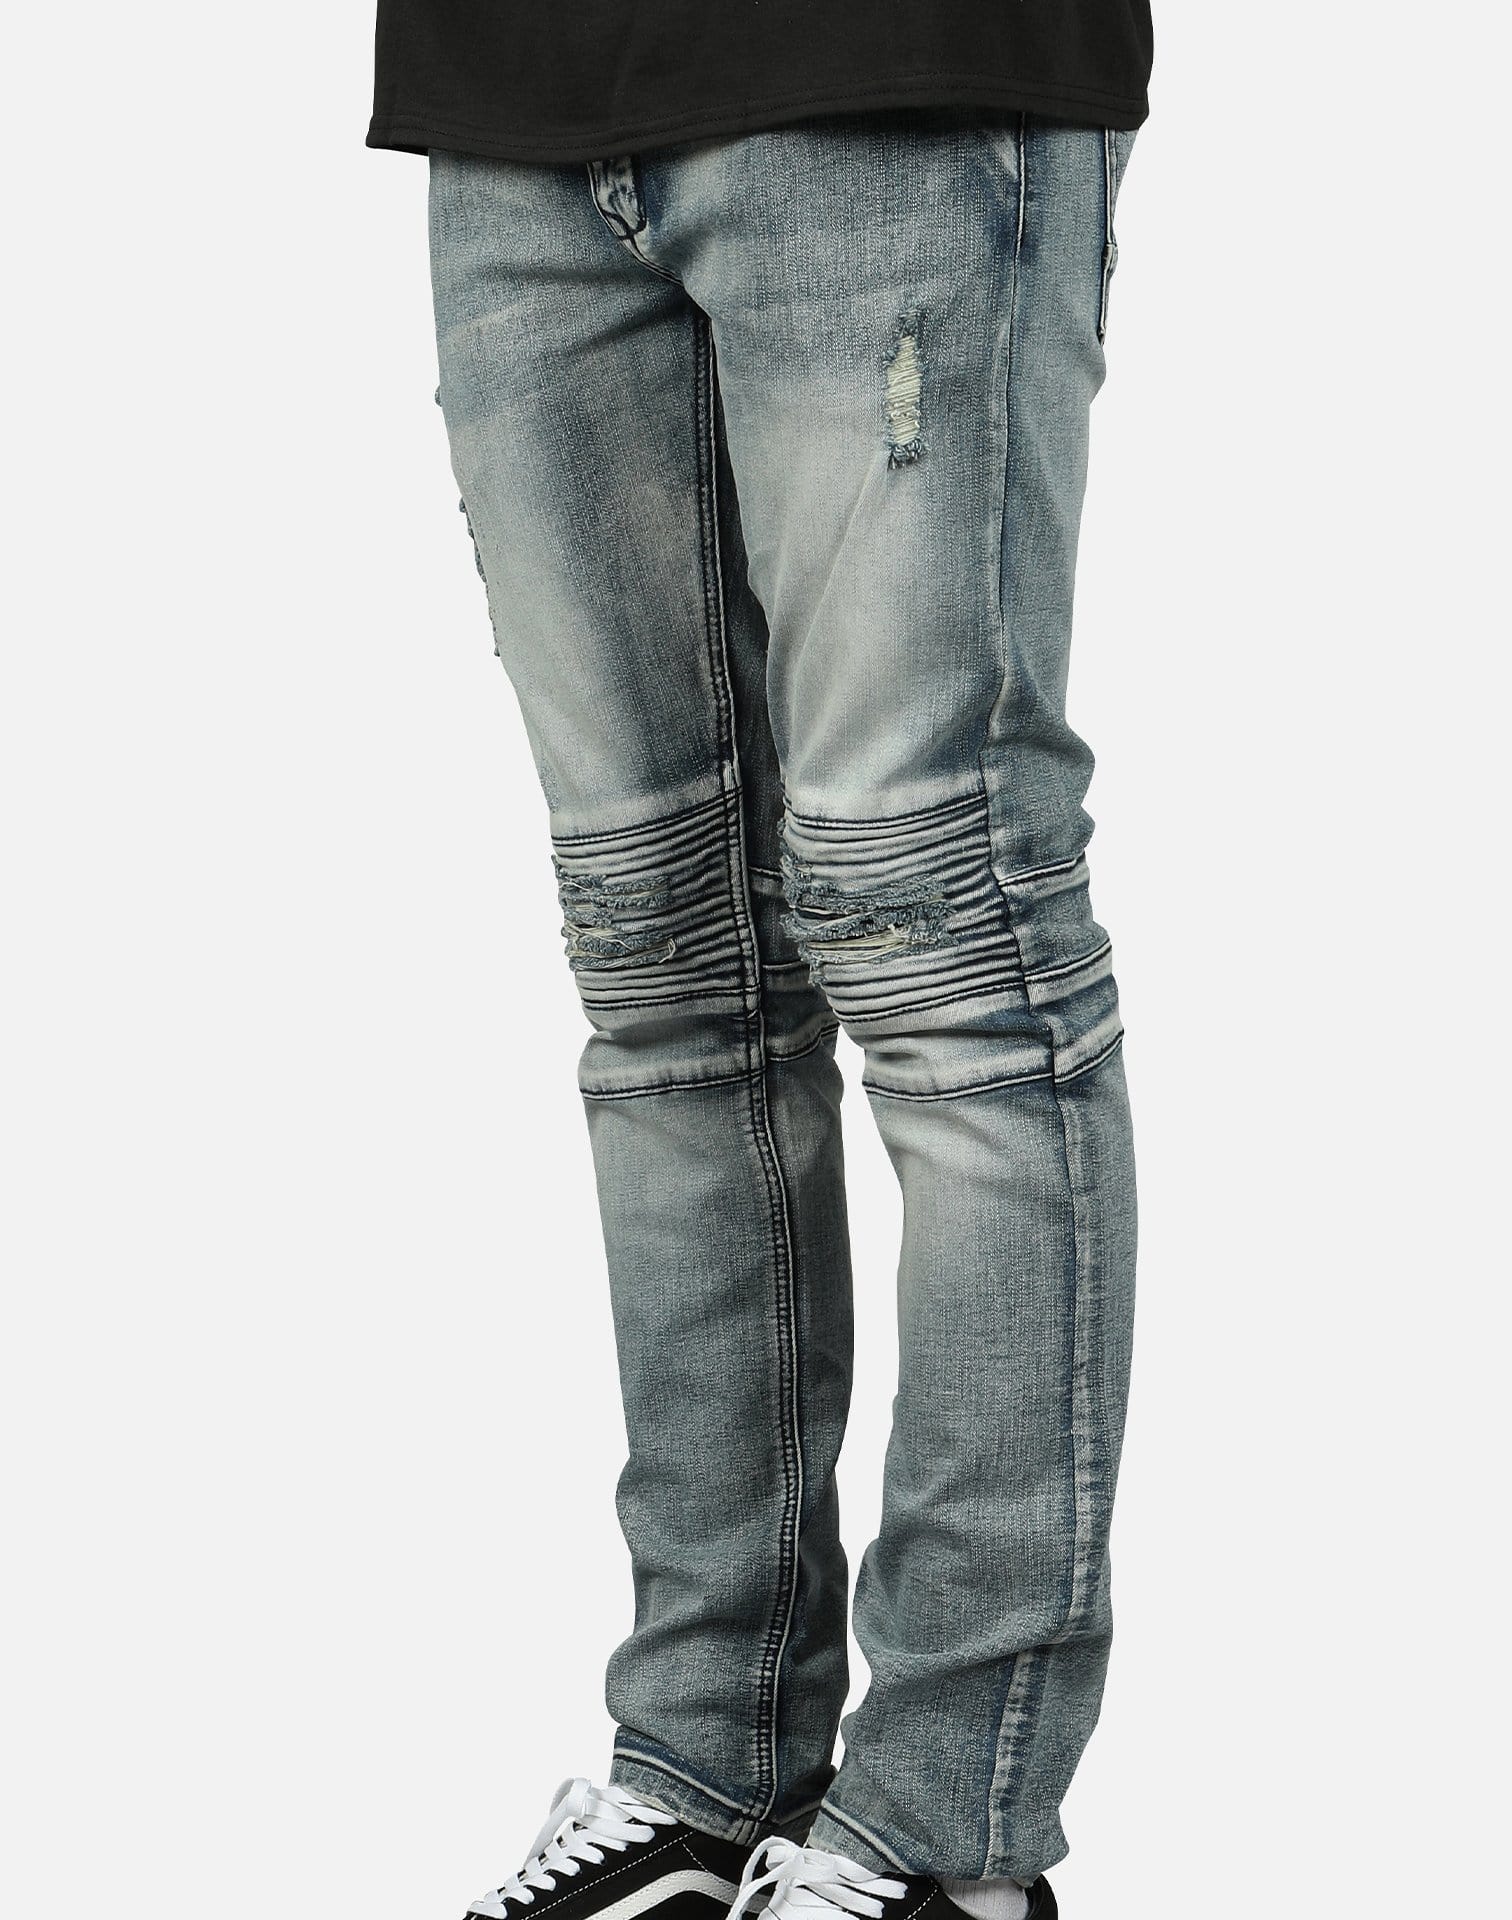 Kilogram Men's Distressed Moto Jeans